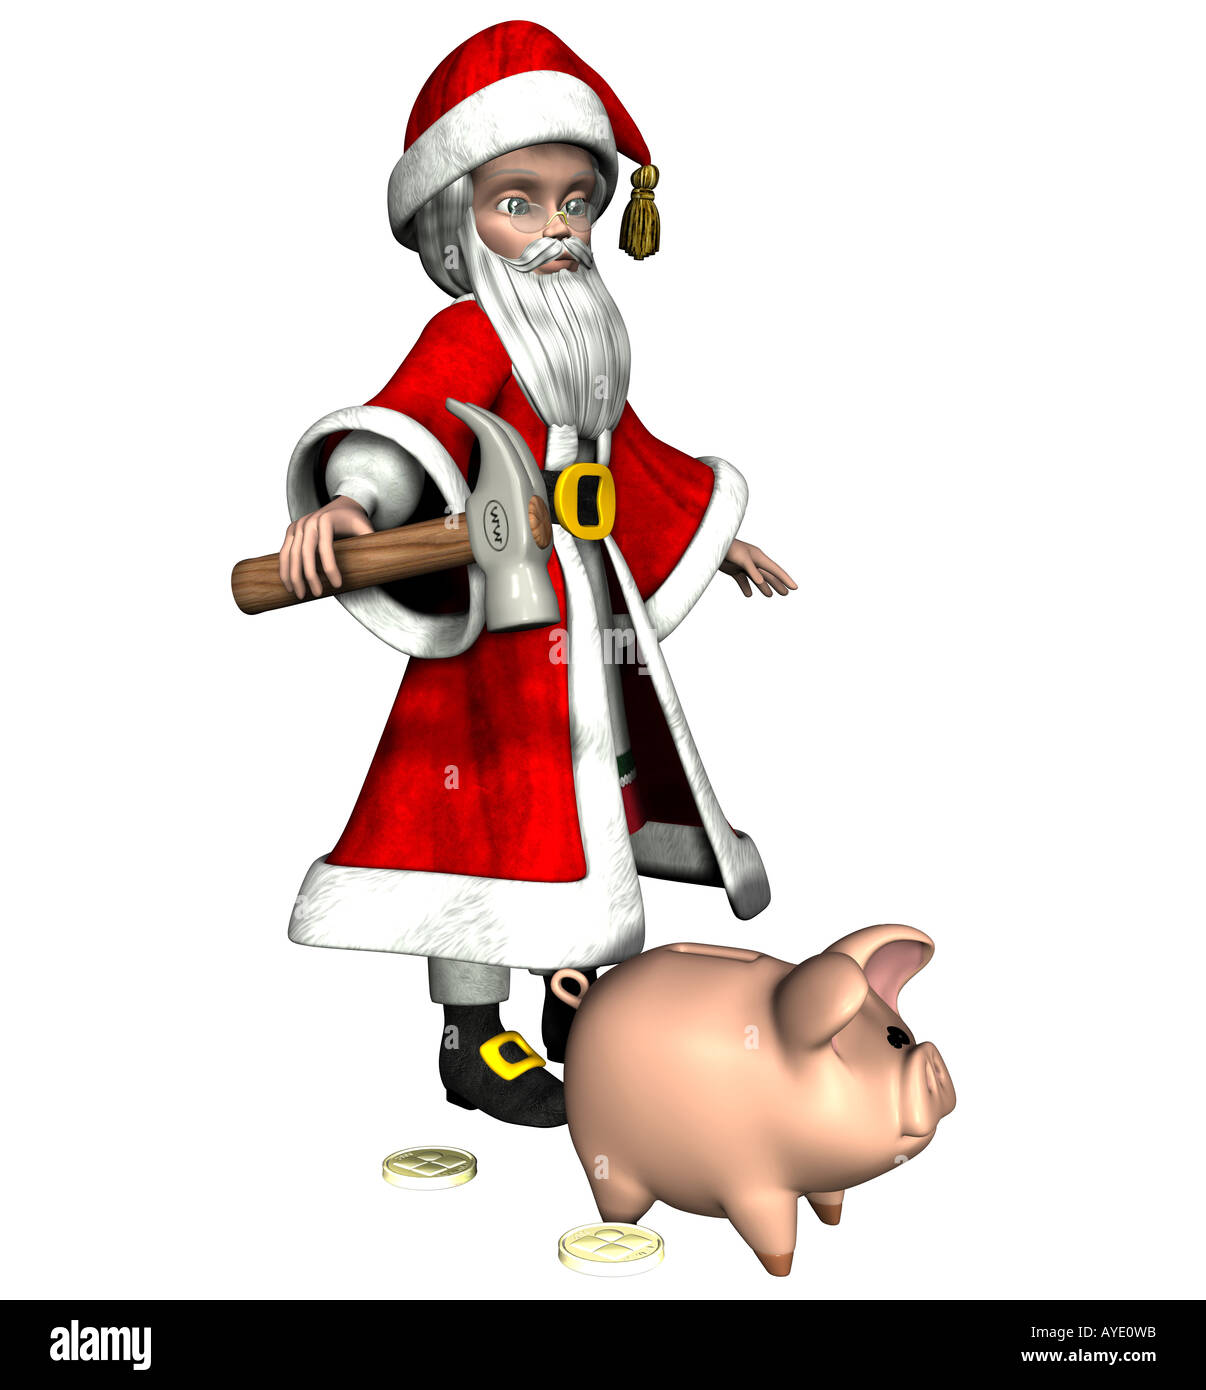 Santa Claus with piggy bank Stock Photo